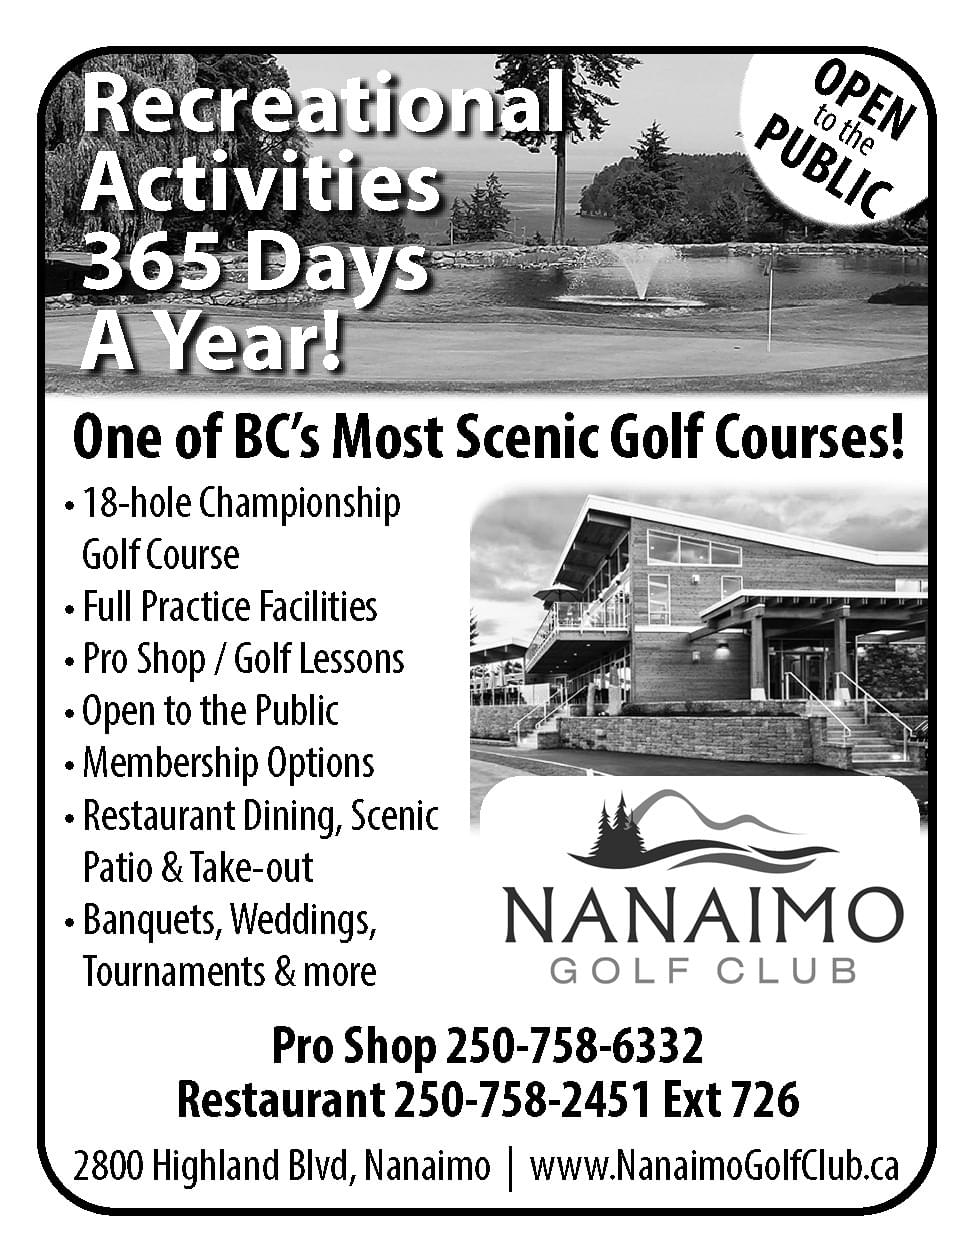 Nanaimo Golf Club Ad in Coffee News